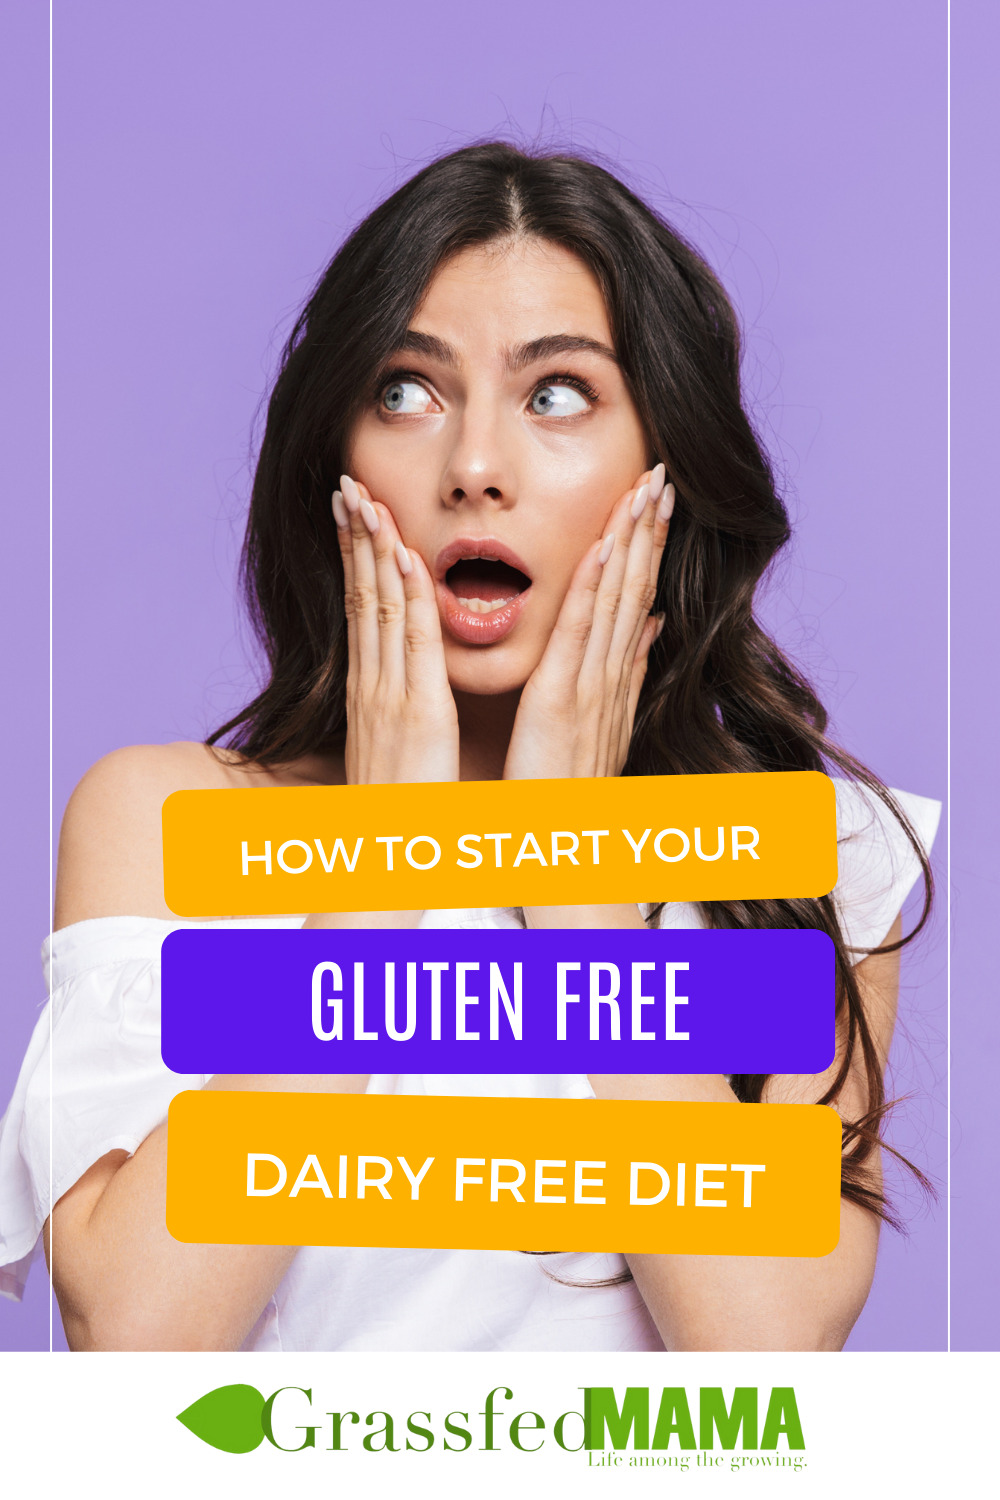 How to Start Your Gluten Free Dairy Free Diet